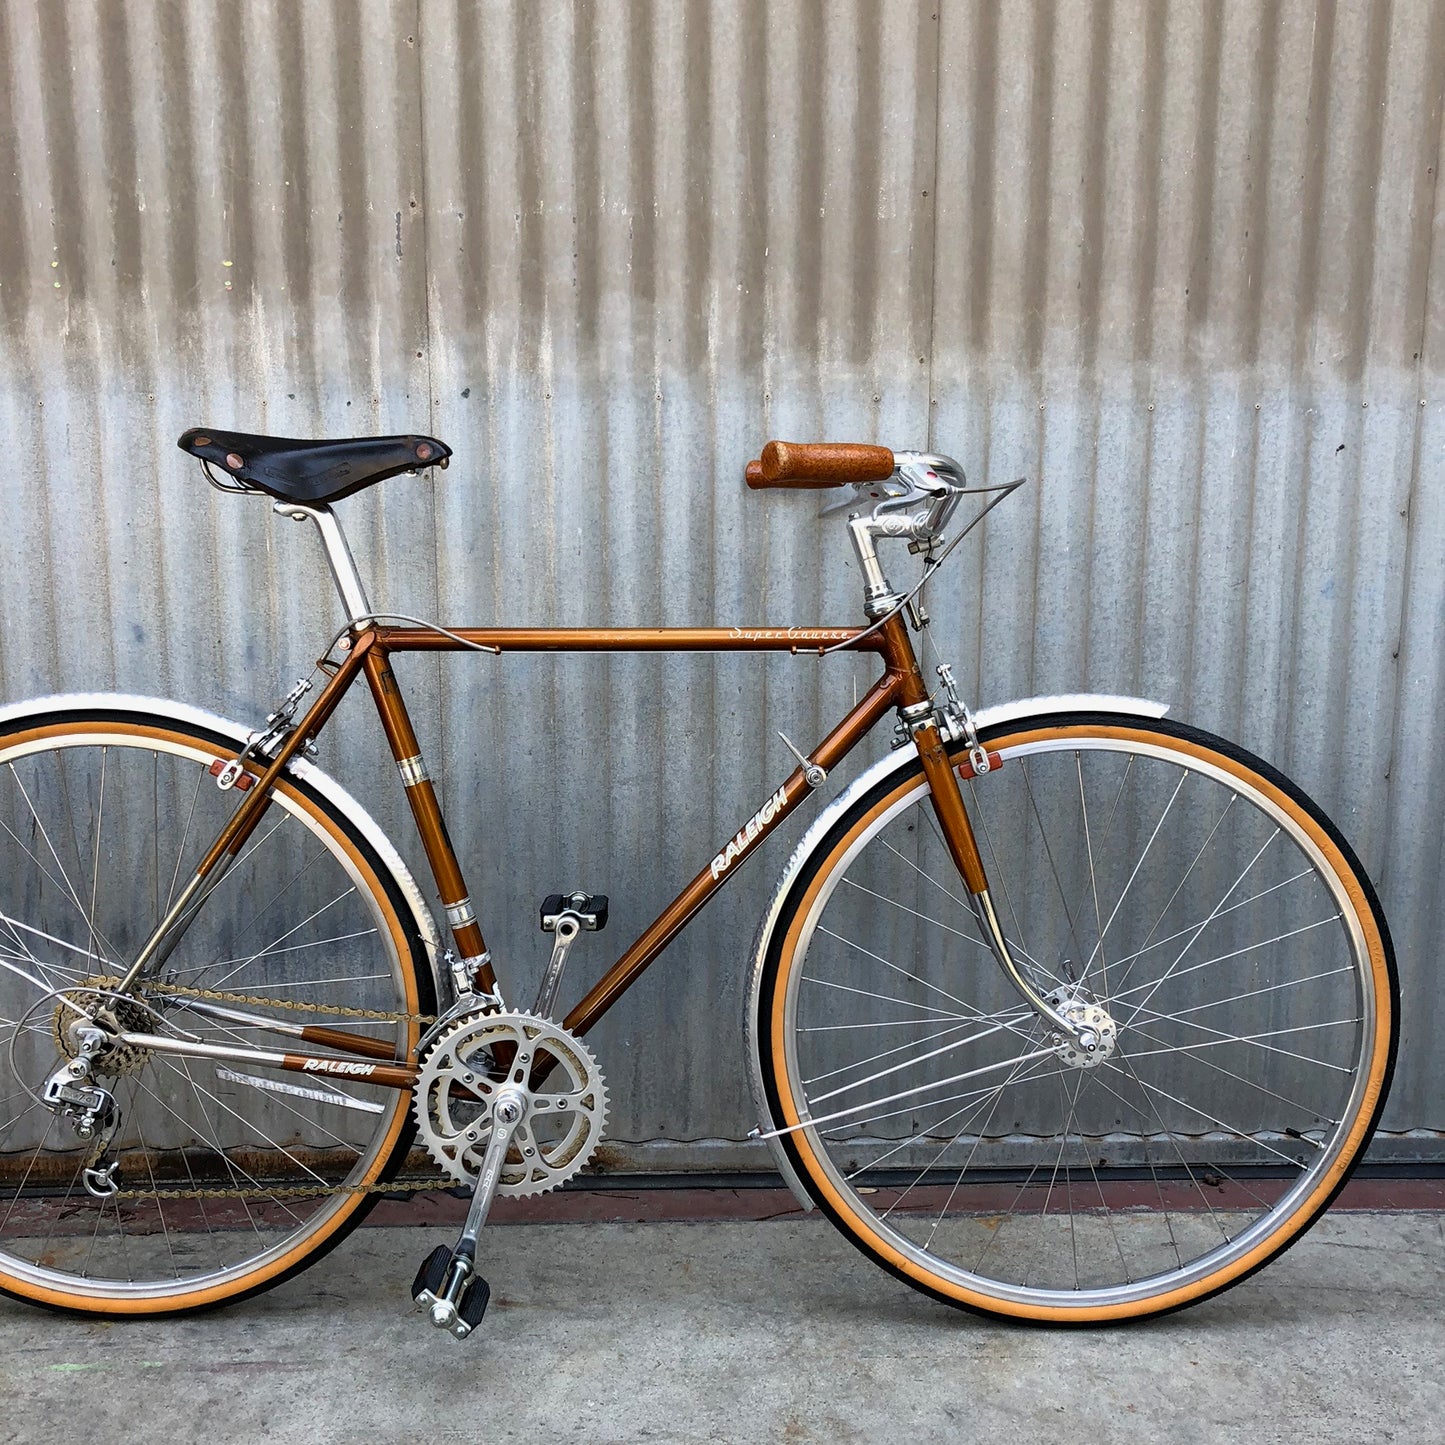 Gentlemen's City Bike - Raleigh Classic English Bike - Studio Rental